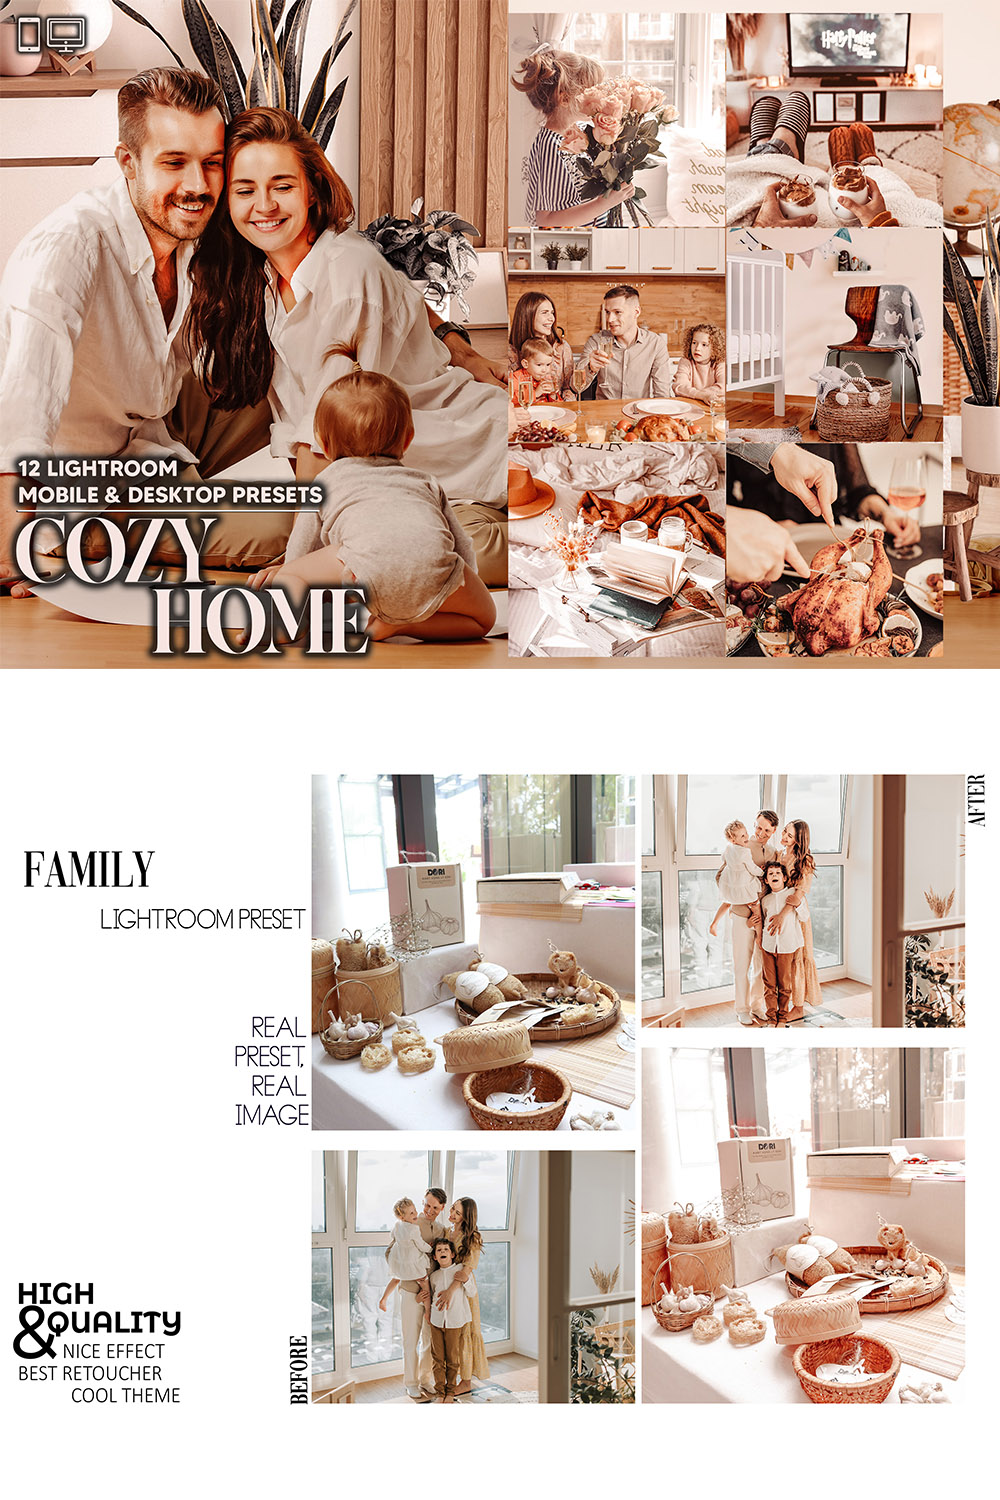 12 Cozy Home Lightroom Presets, Family Time Mobile Preset, Warm Indoor Desktop, Lifestyle Portrait Theme For Instagram LR Filter DNG Autumn pinterest preview image.